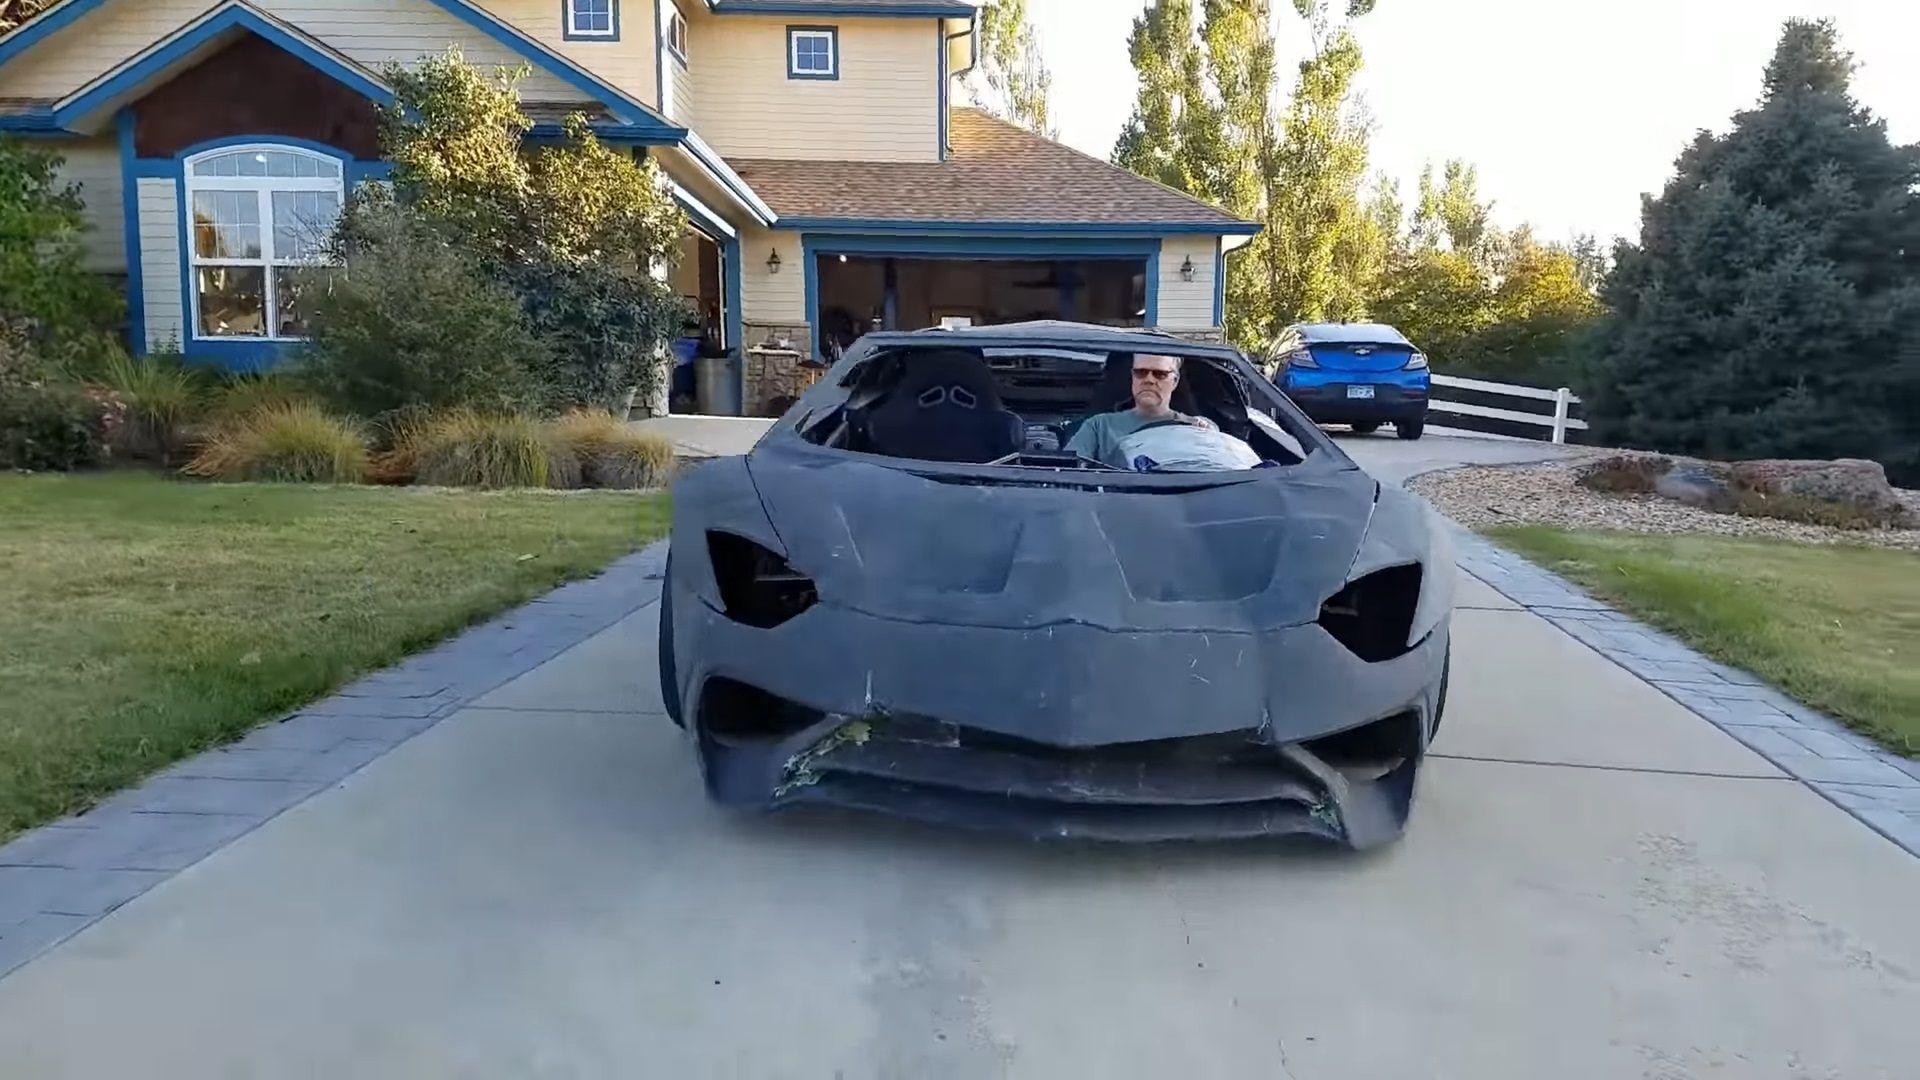 Ojciec Zbudował Dla Syna Lamborghini Aventador - Zdjecia | Autokult.pl